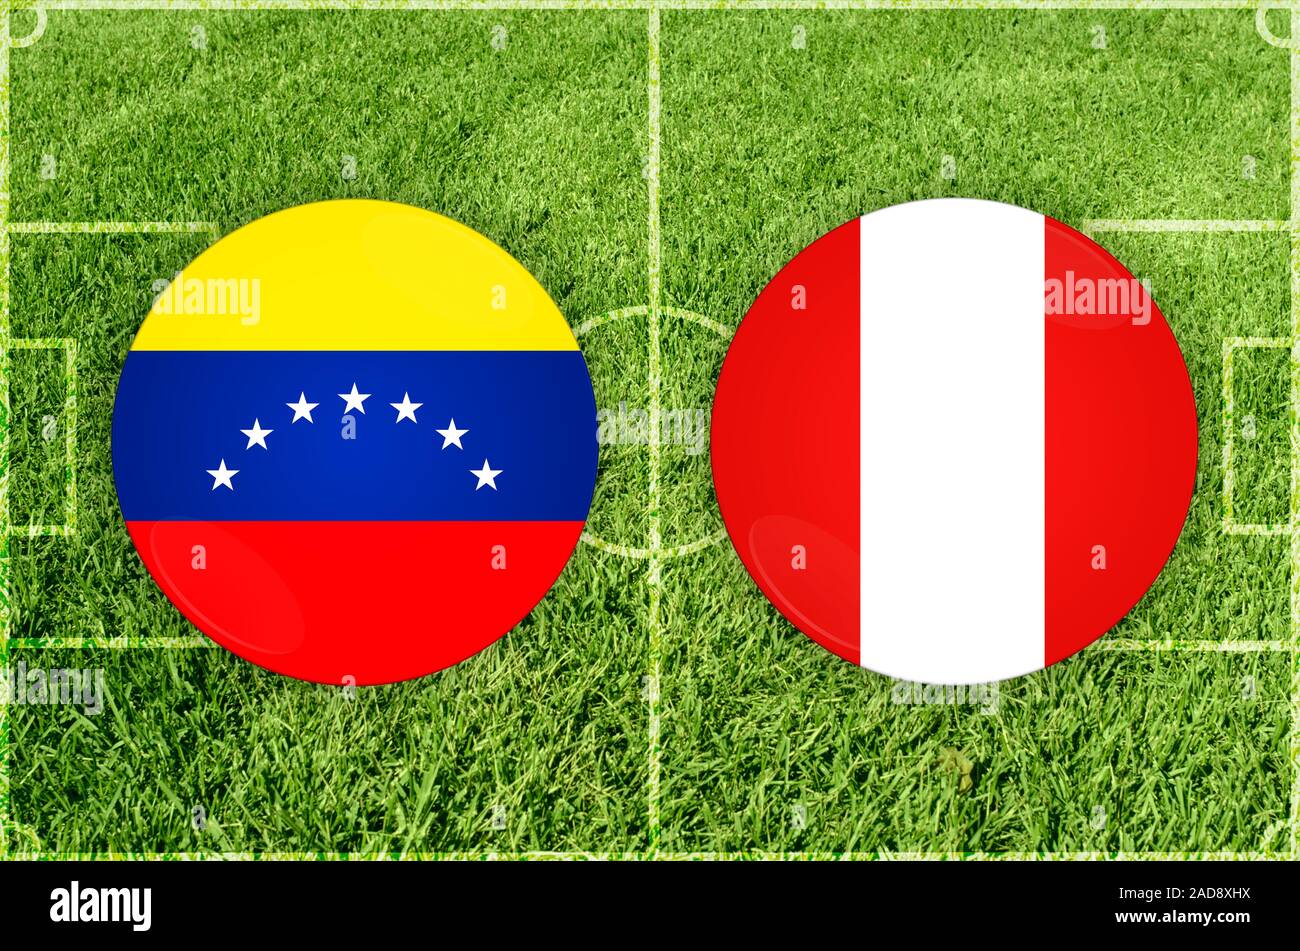 Venezuela vs Peru football match Stock Photo